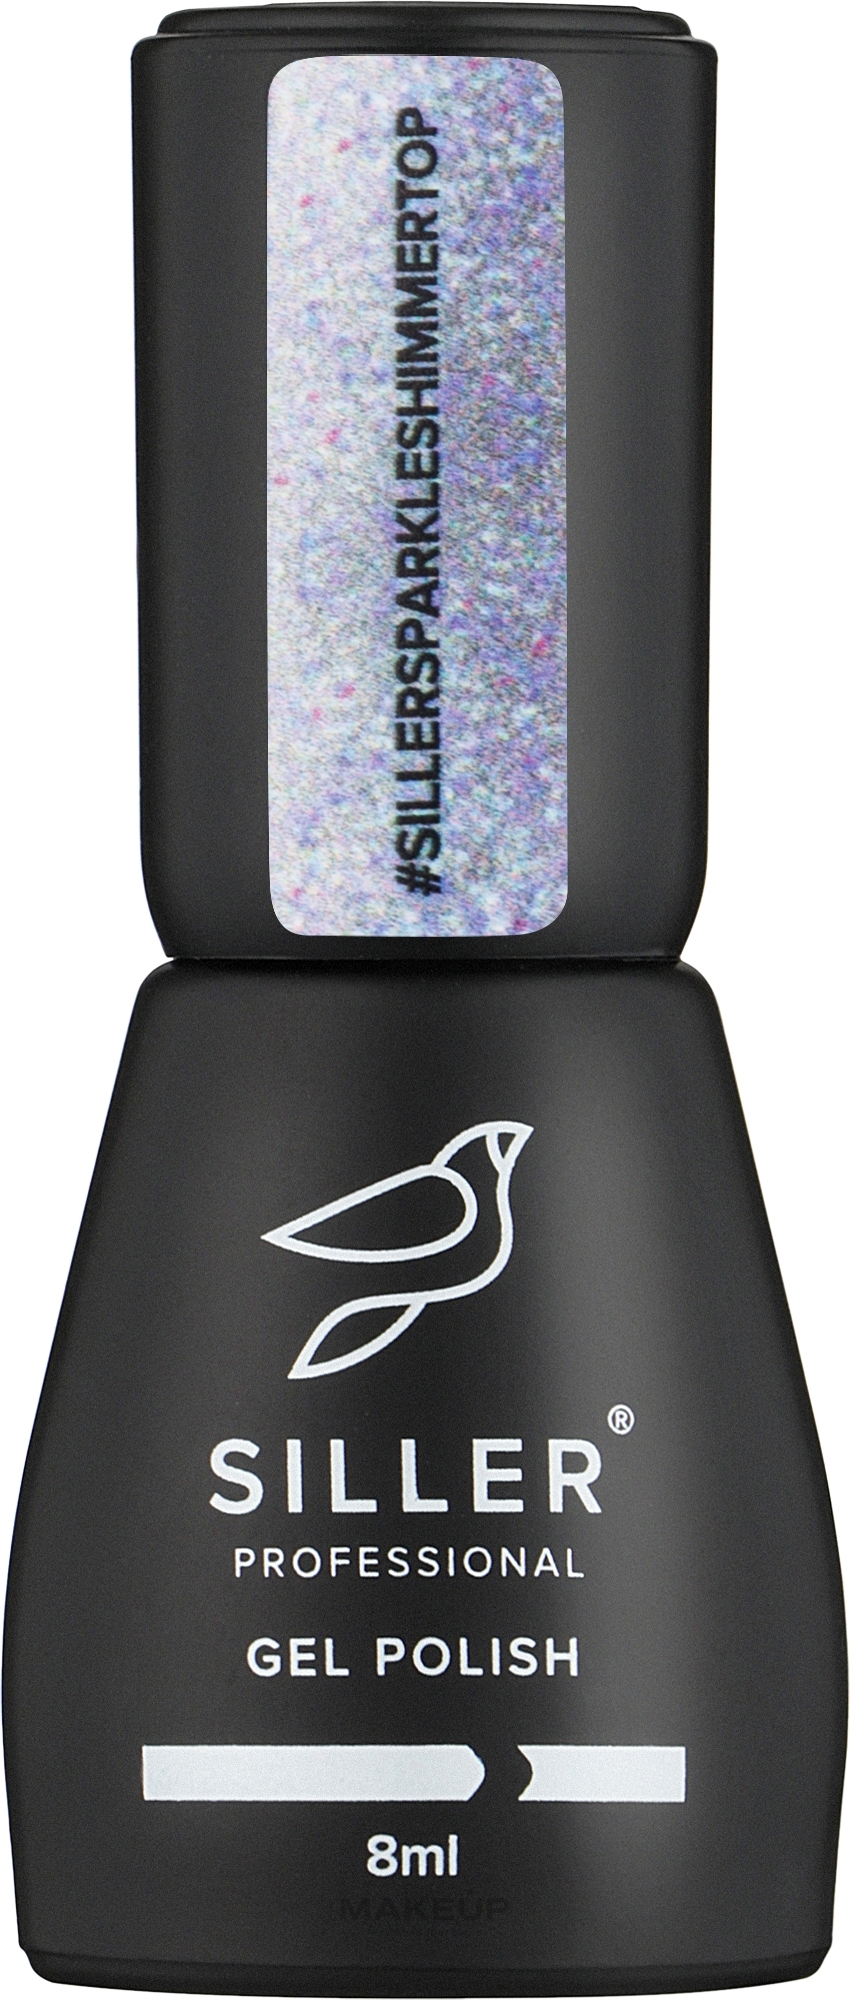 Топ для гель-лака - Siller Professional Sparkle Shimmer Top — фото 8ml